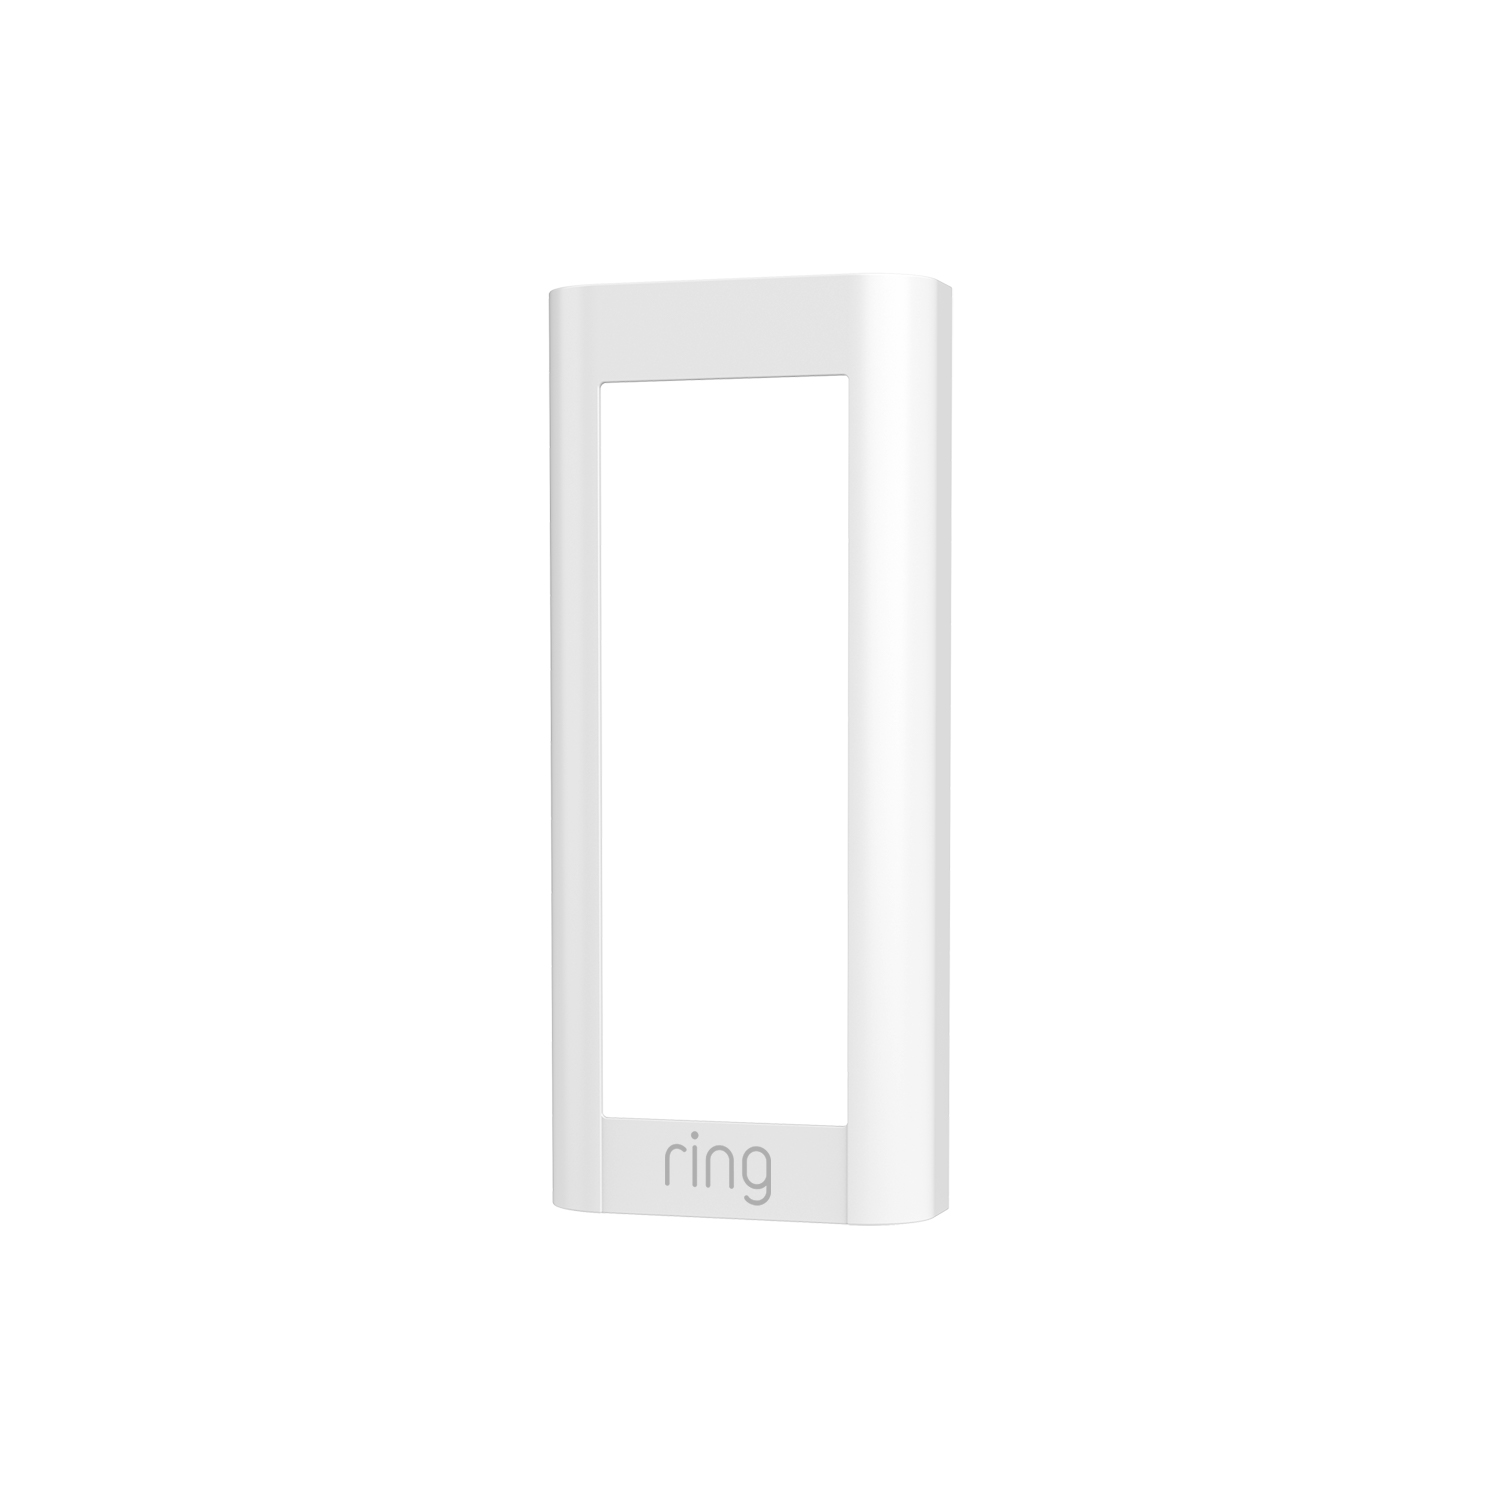 Interchangeable Faceplate (for Wired Doorbell Pro (Video Doorbell Pro 2)) - White